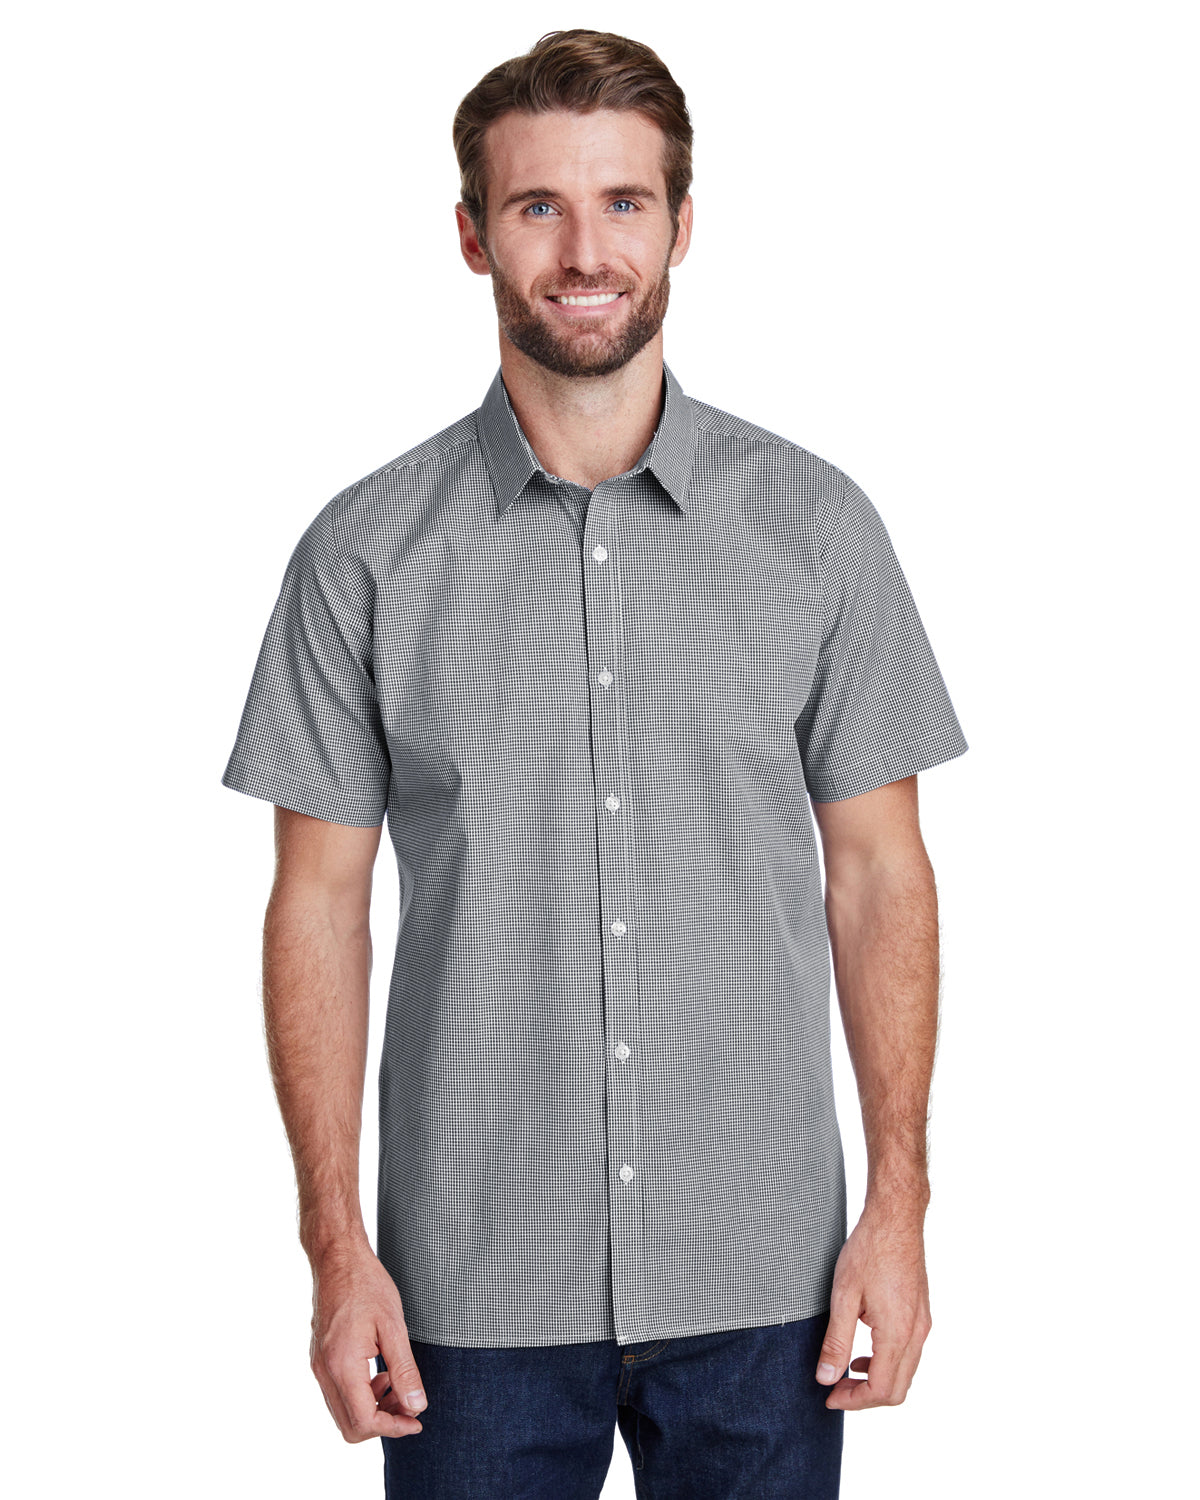 Microcheck Gingham Short-Sleeve Cotton Shirt